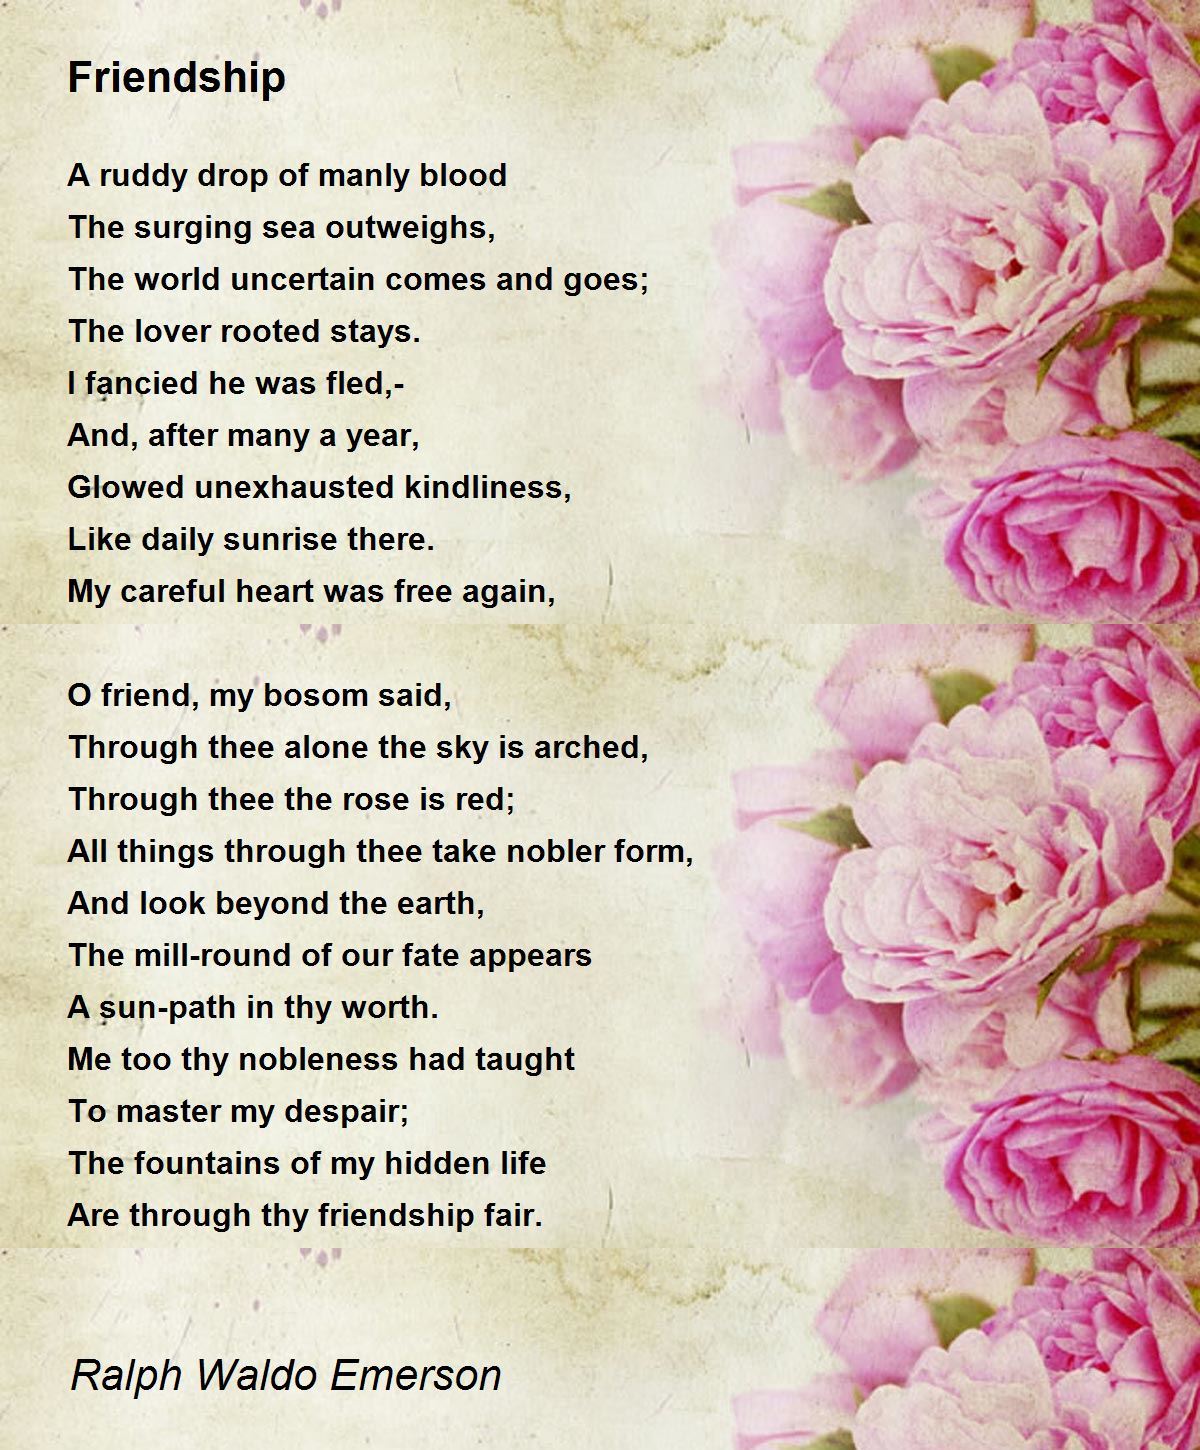 Friendship Poem by Ralph Waldo Emerson - Poem Hunter